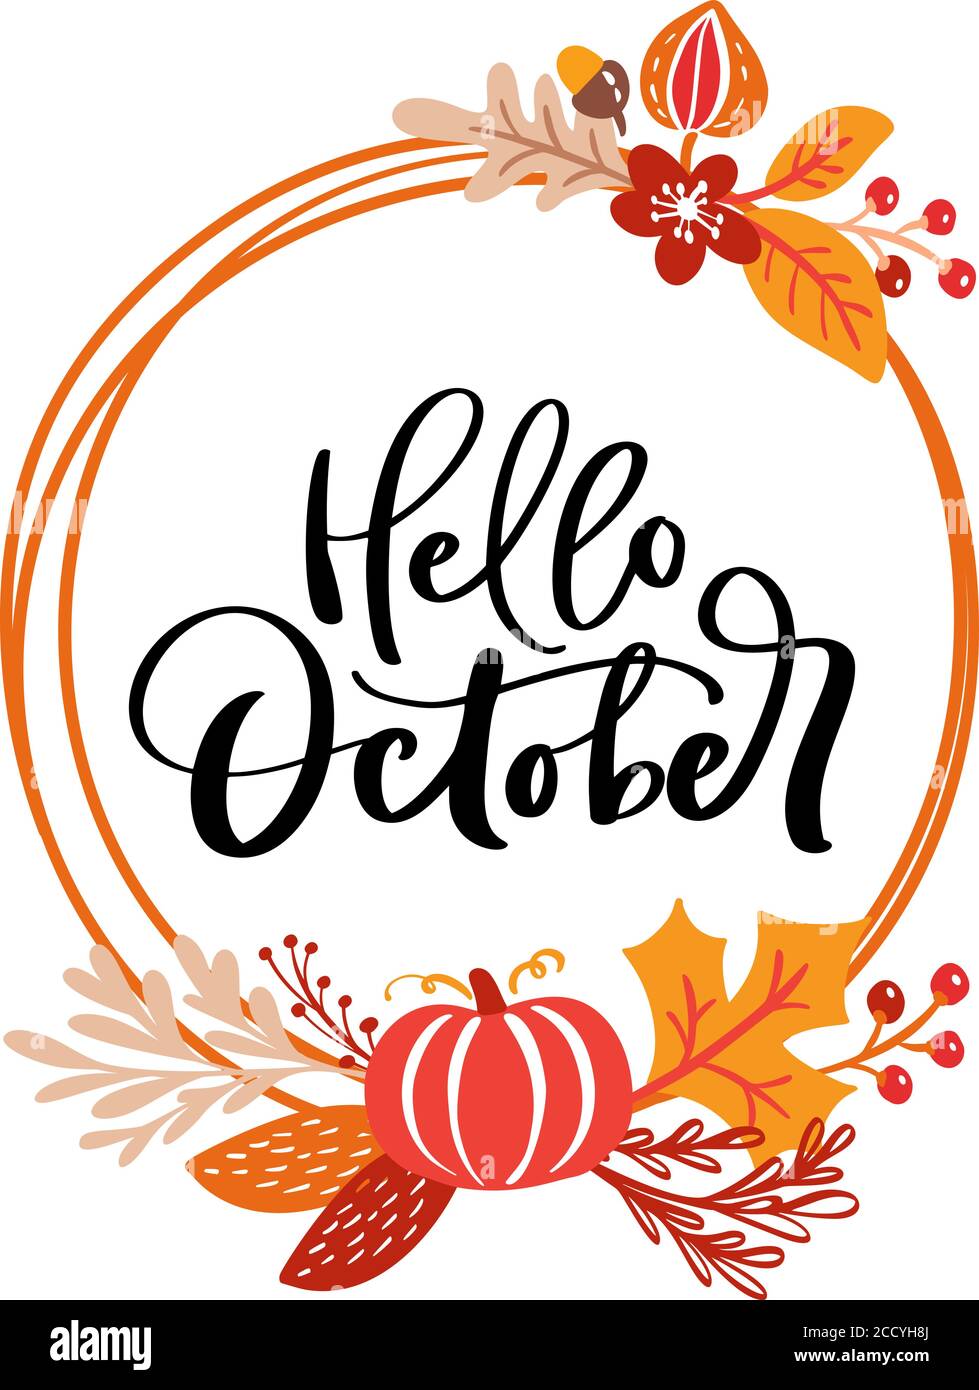 Hello October Handwritten Lettering Vector Text In Wreath With Autumn